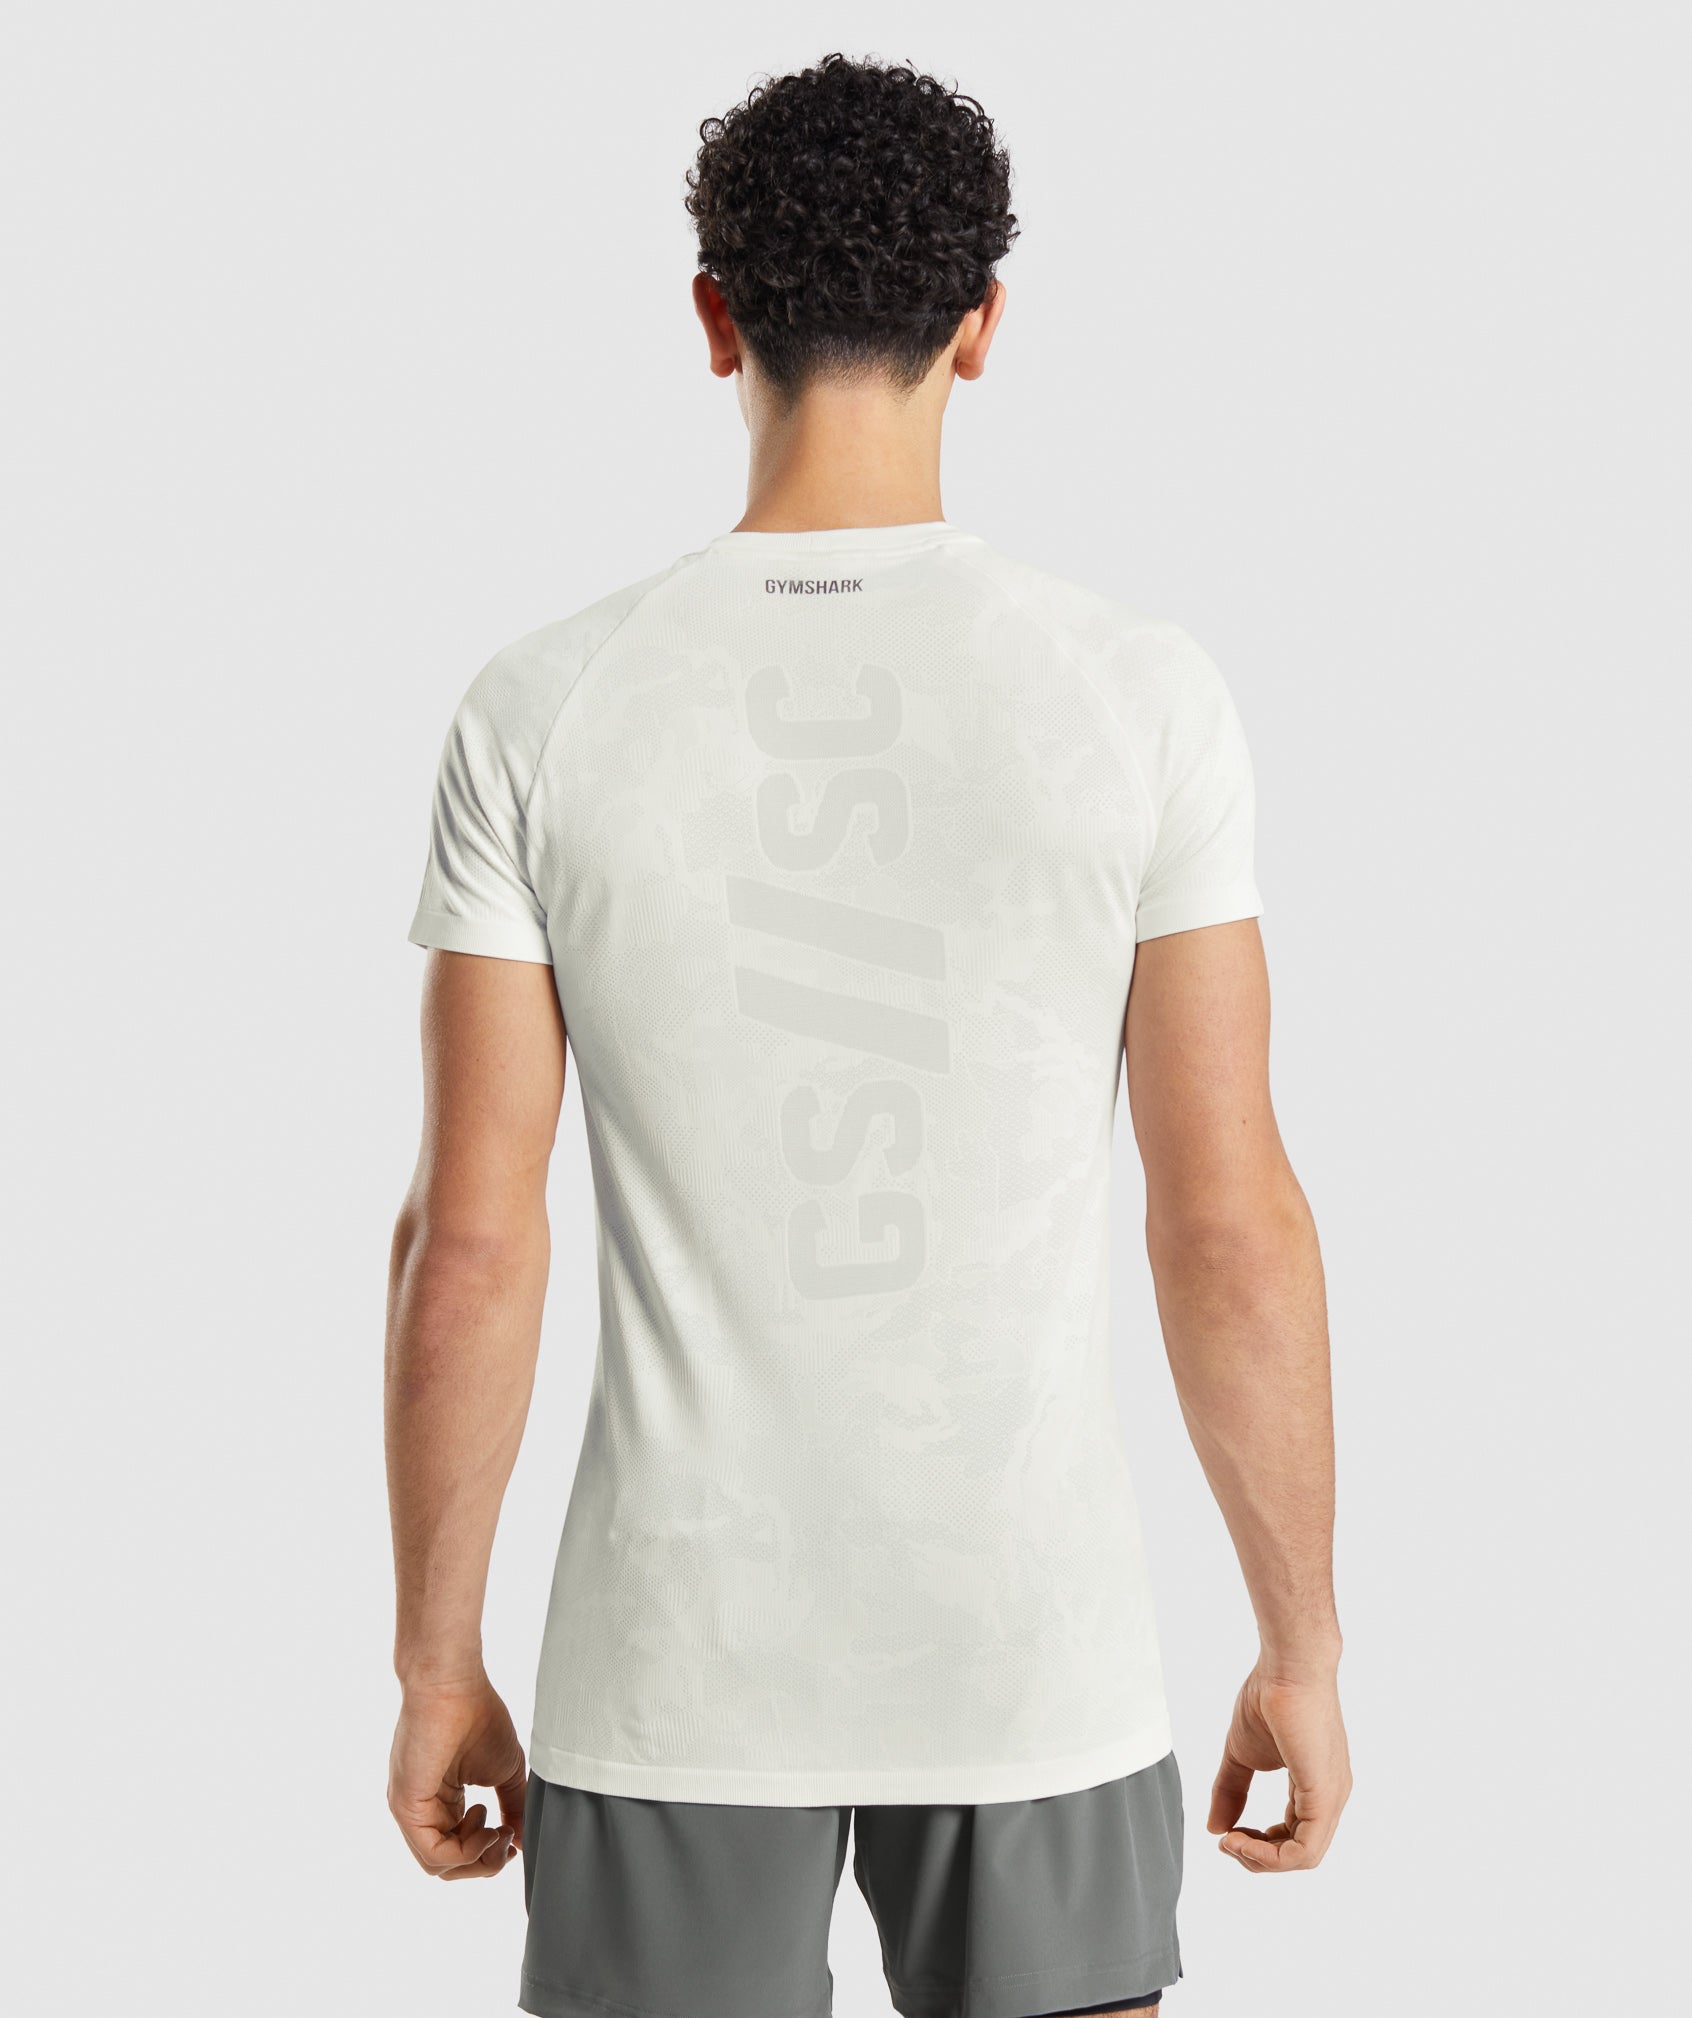 Gymshark//Steve Cook Seamless T-Shirt in Off White/Light Grey - view 2